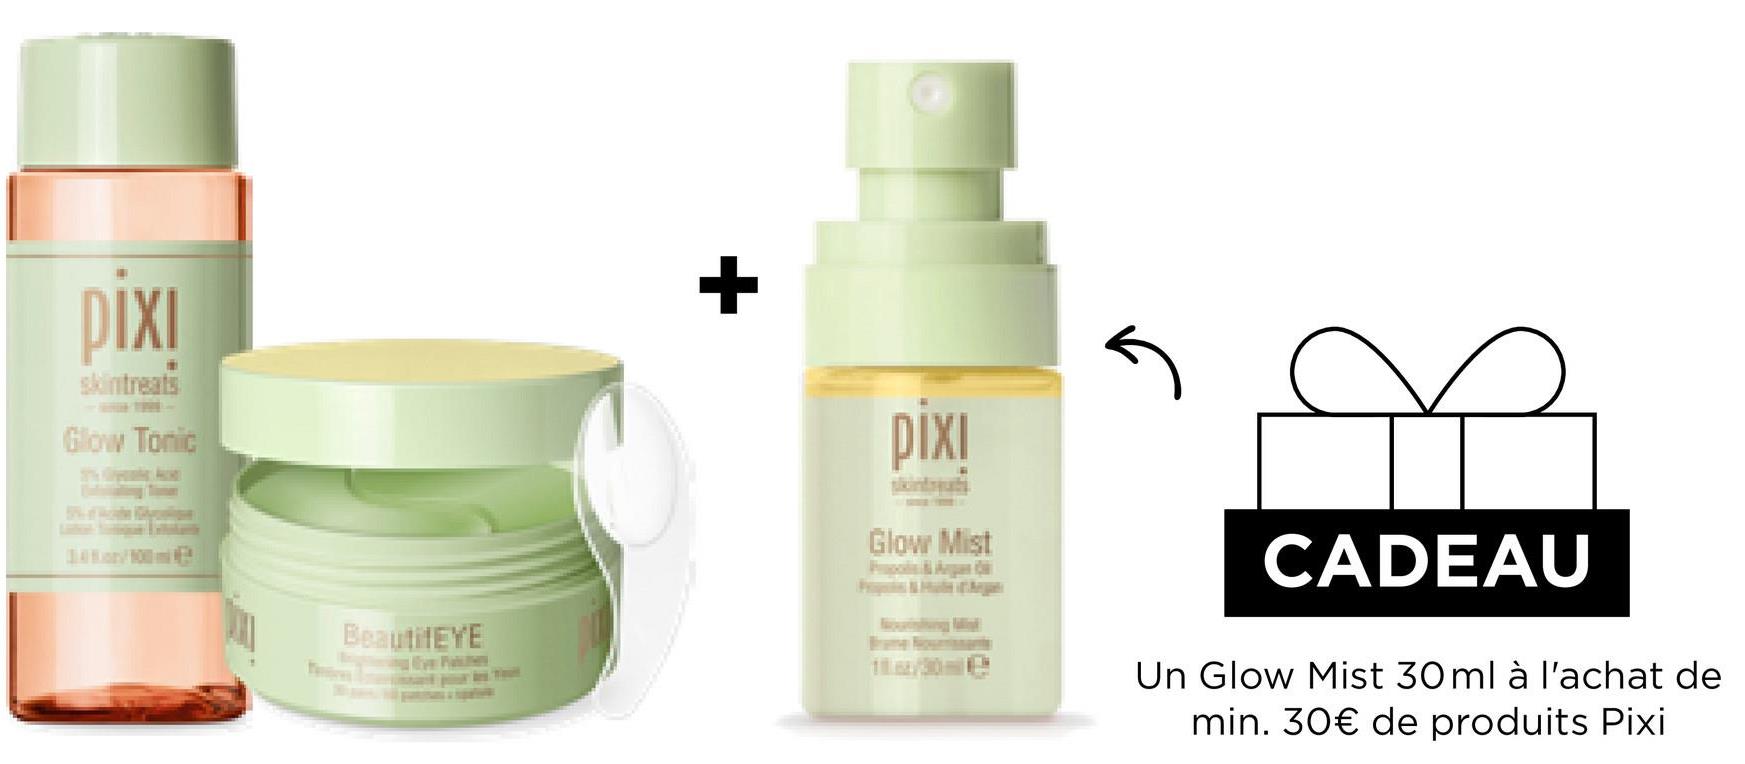 pixi
Glow Tonic
BeautifEYE
+
pixi
Glow Mist
CADEAU
Un Glow Mist 30ml à l'achat de
min. 30€ de produits Pixi